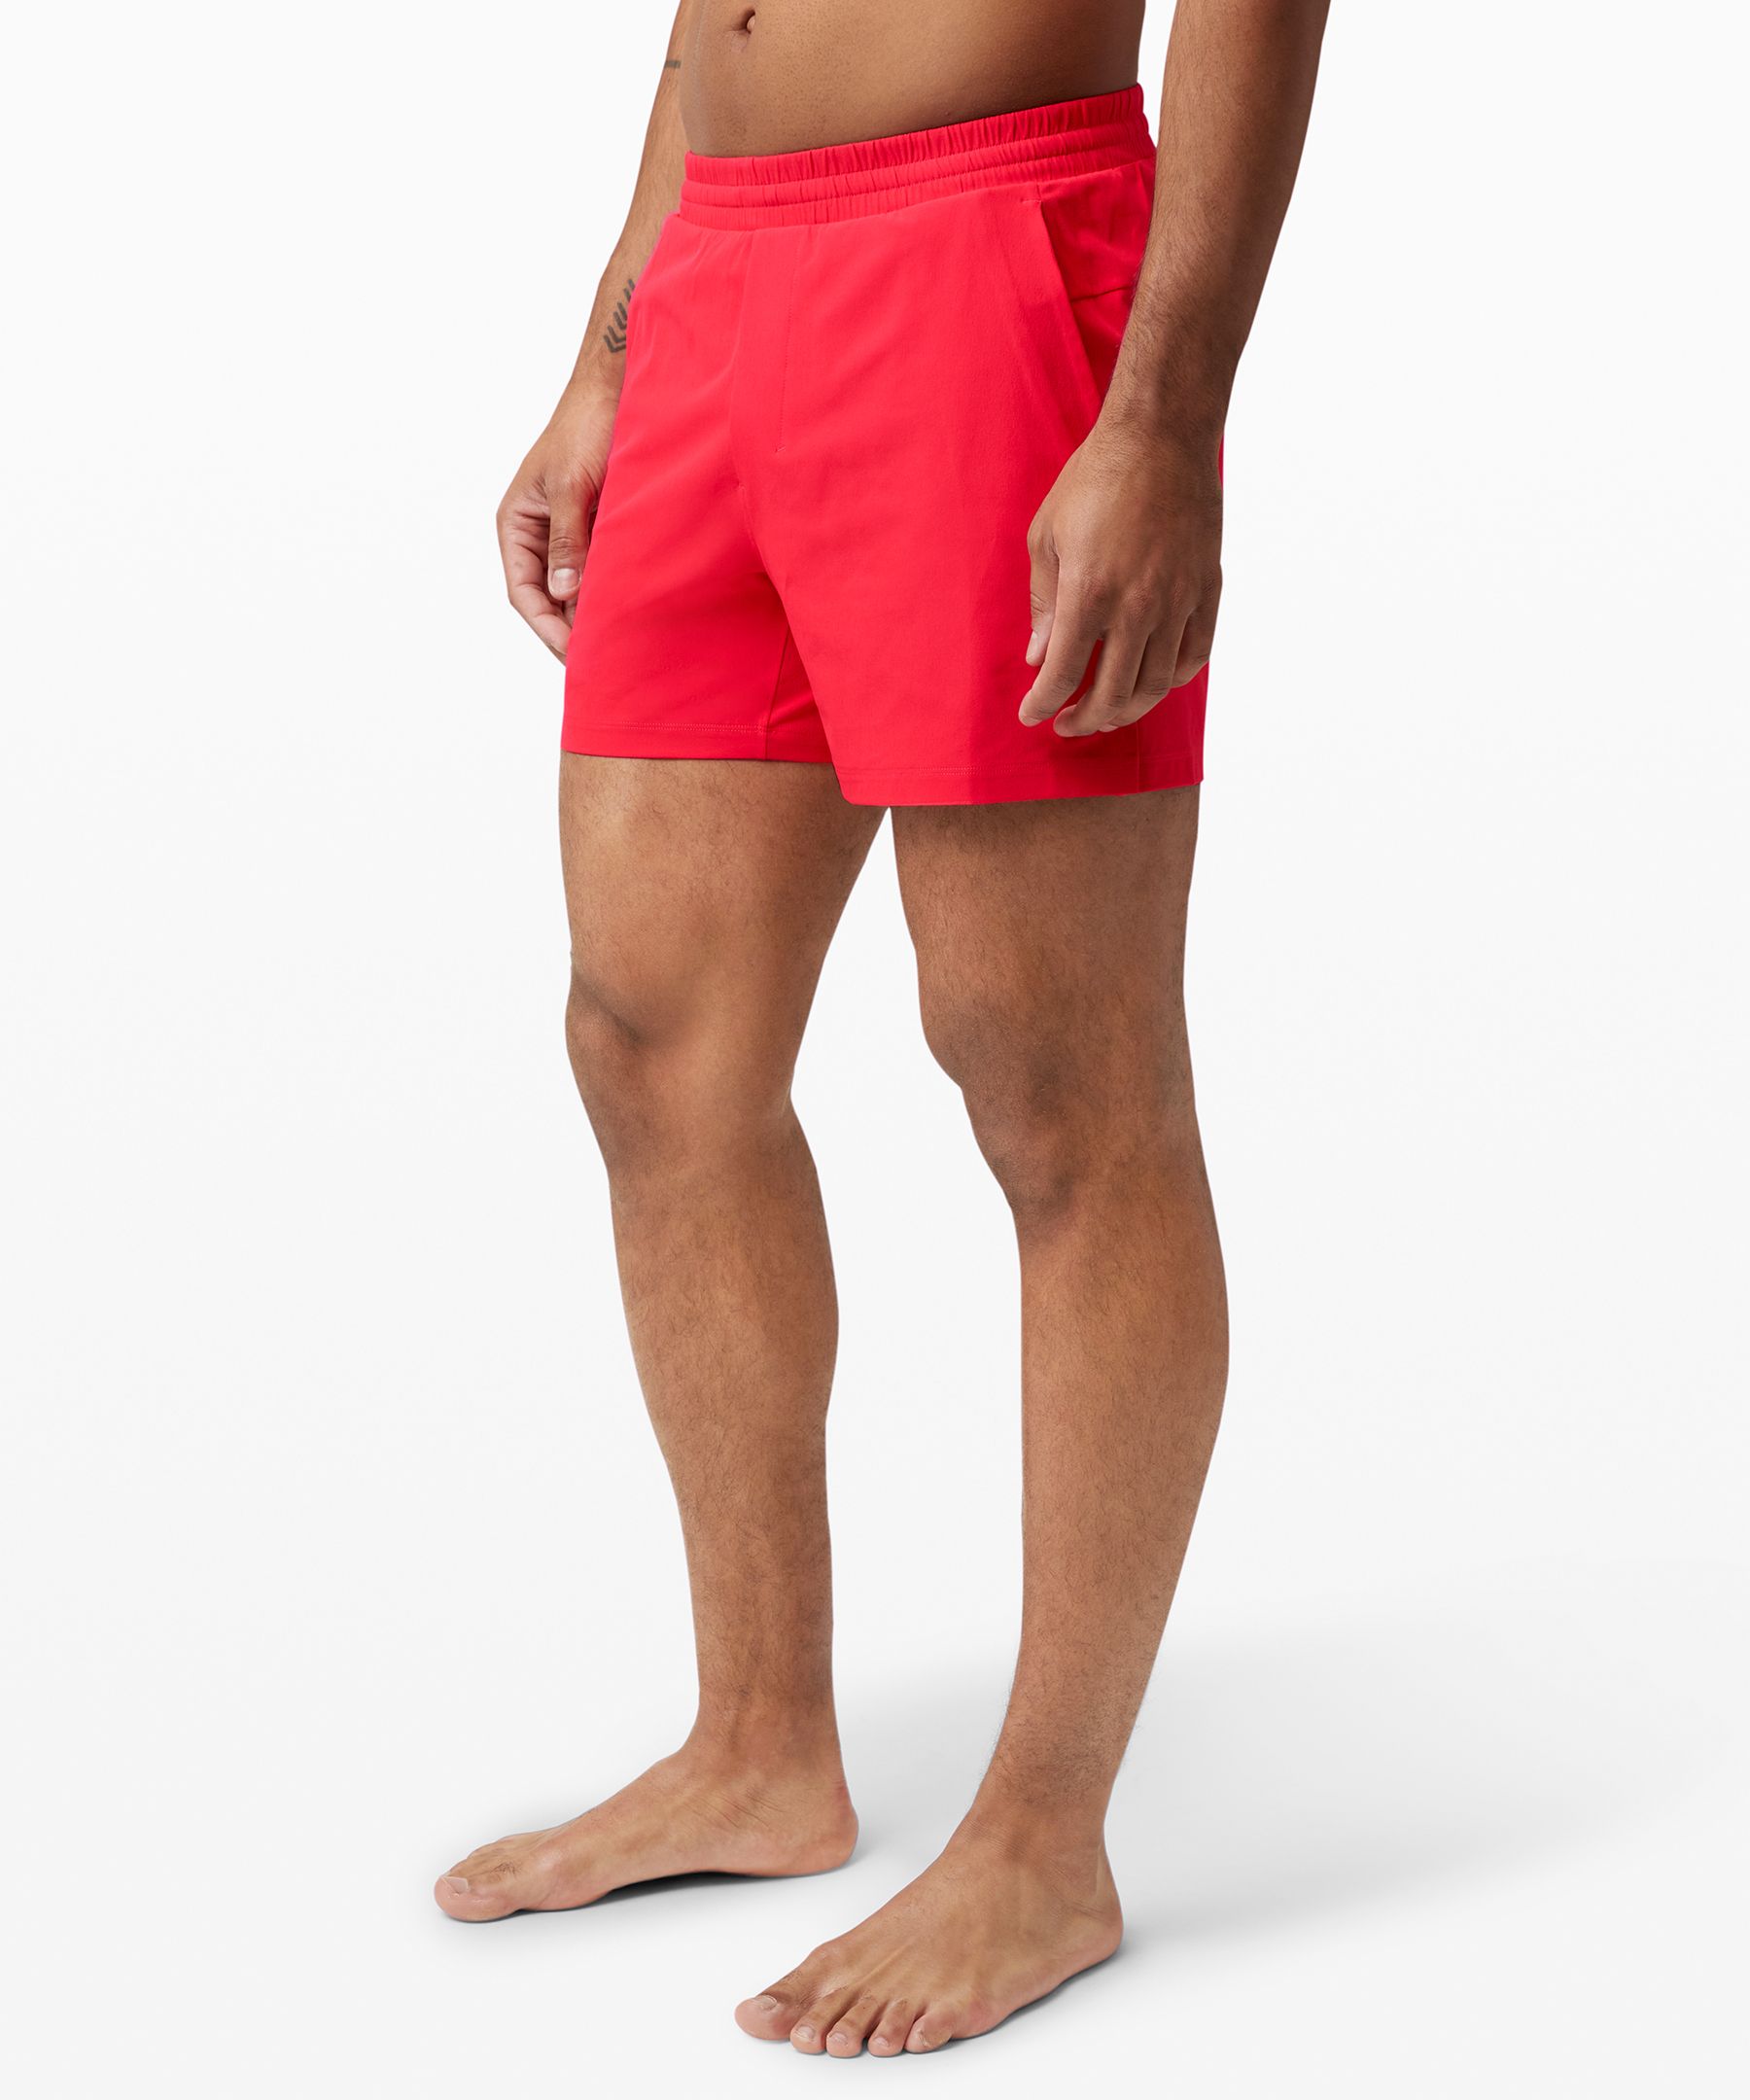 red lululemon shorts mens